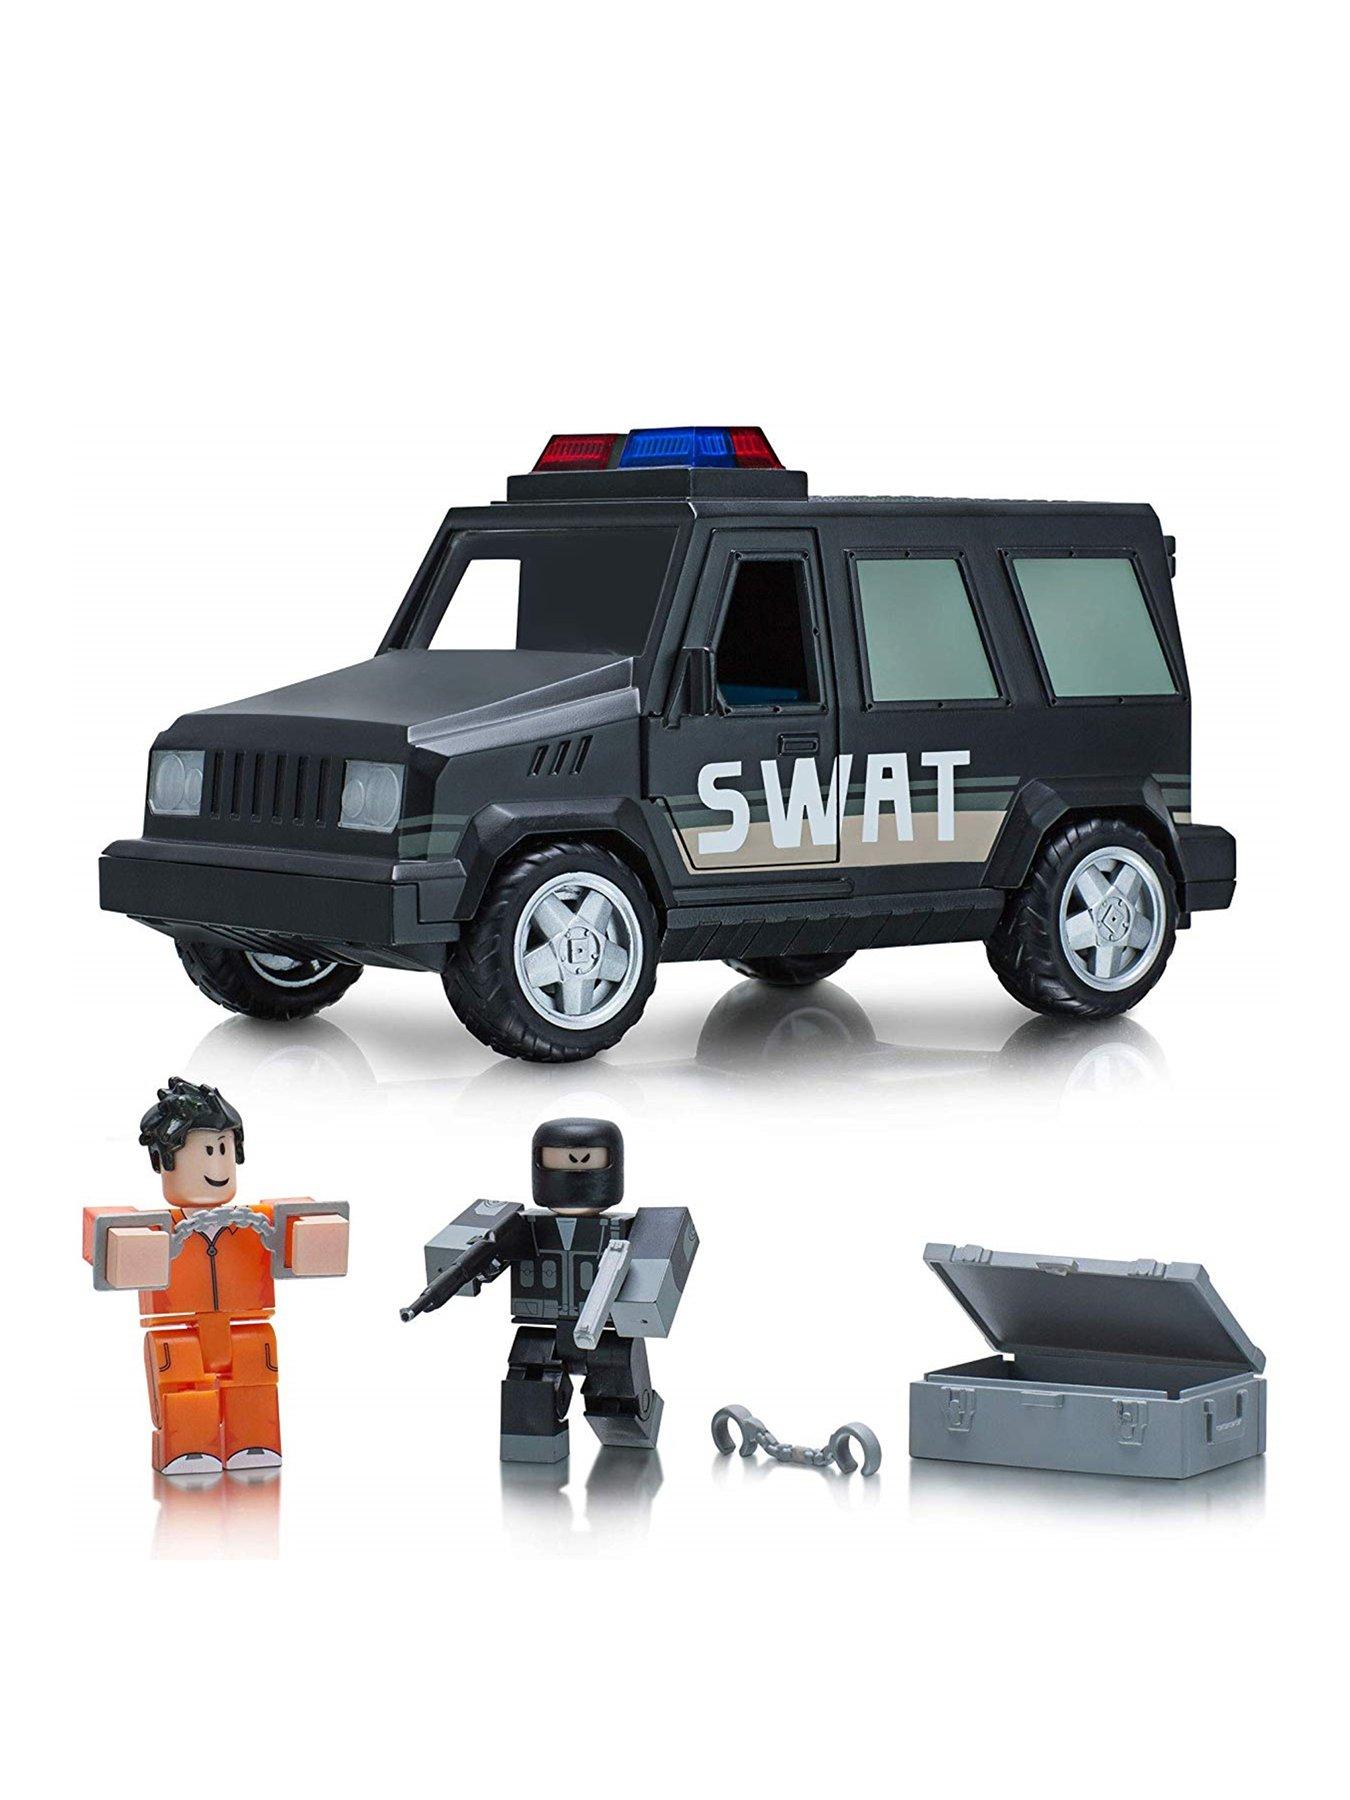 Roblox Swat Van Vehicle Very Co Uk - the boss takes over jailbreak a roblox jailbreak roleplay story